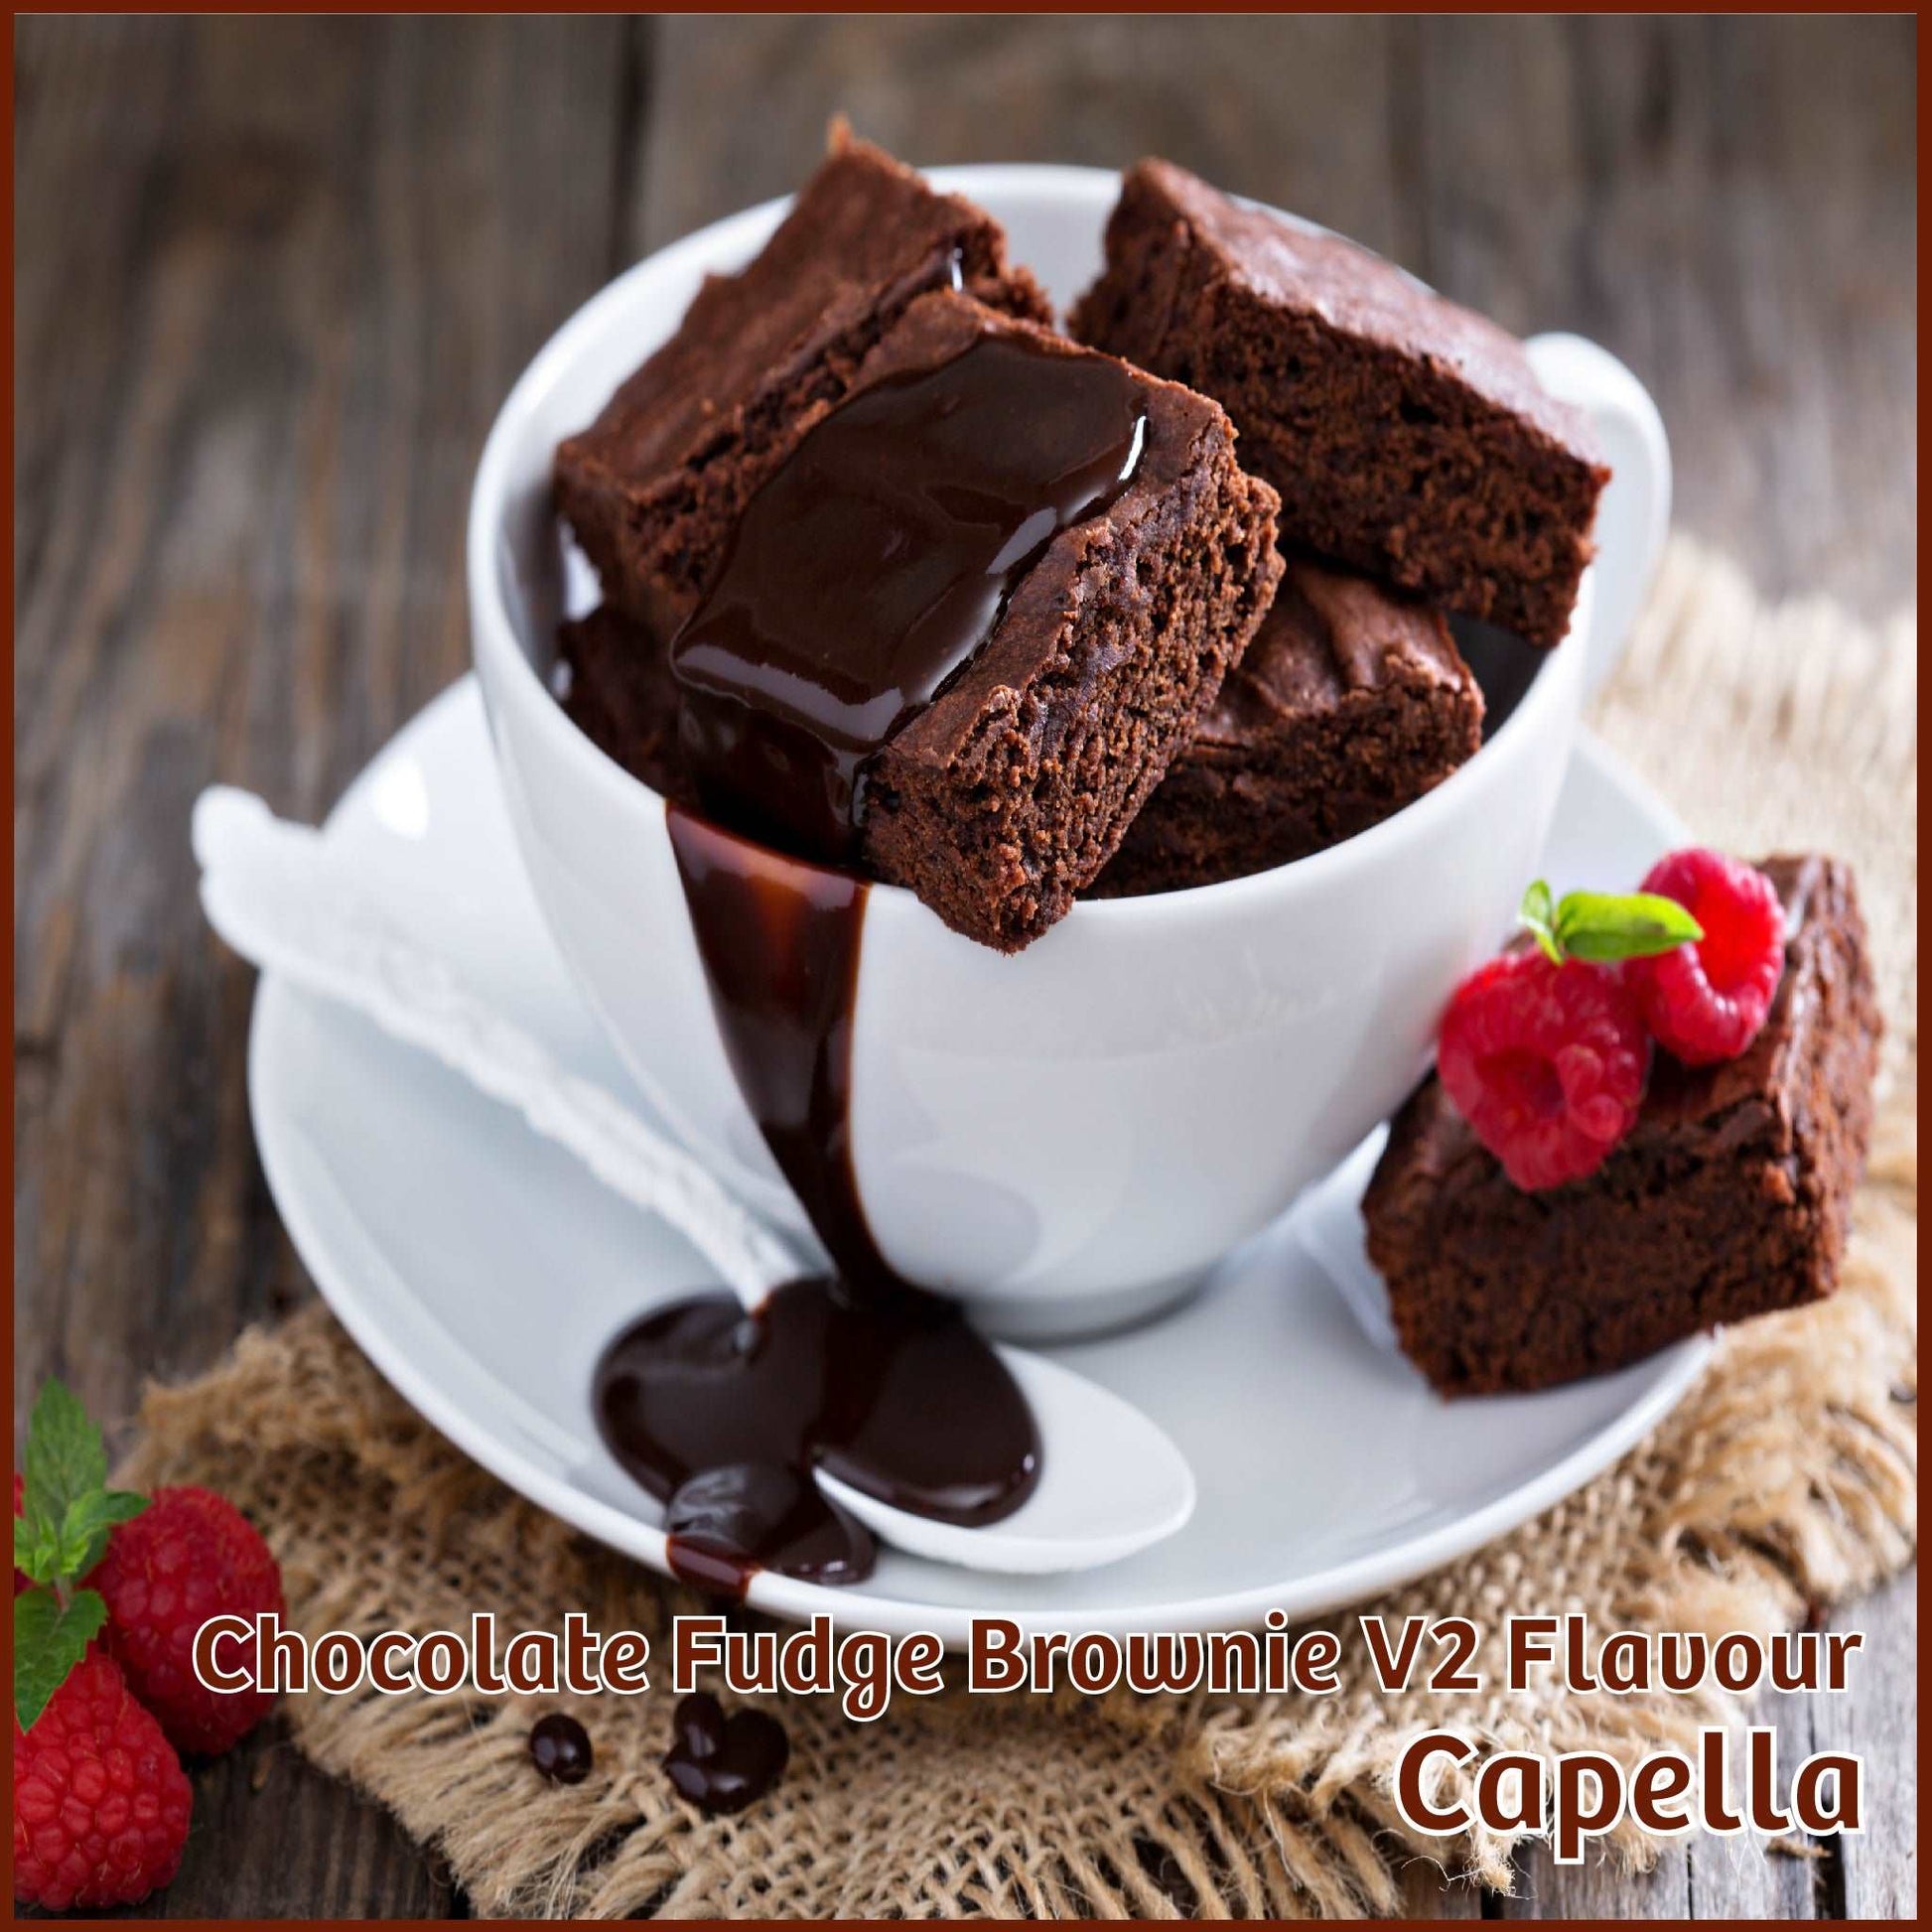 Chocolate Fudge Brownie V3 - Capella - Flavour Fog - Canada's flavour depot.